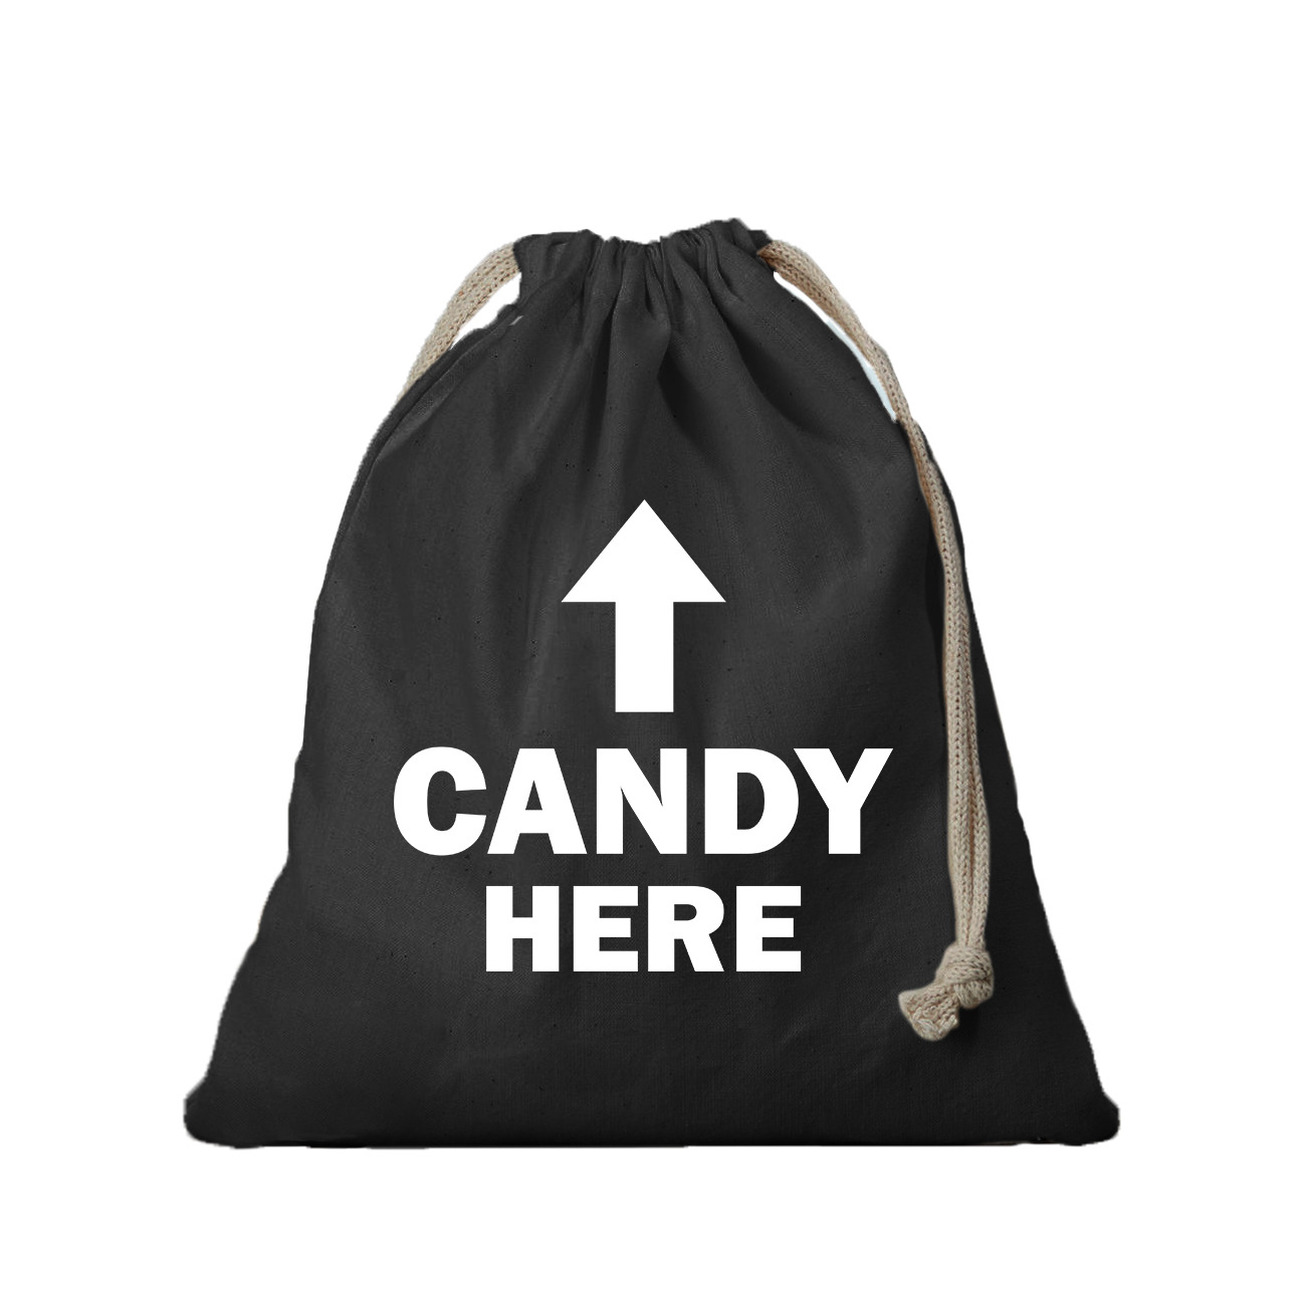 1x Halloween- Sint Maarten canvas tasje Candy Here zwart met koord 25 x 30 cm